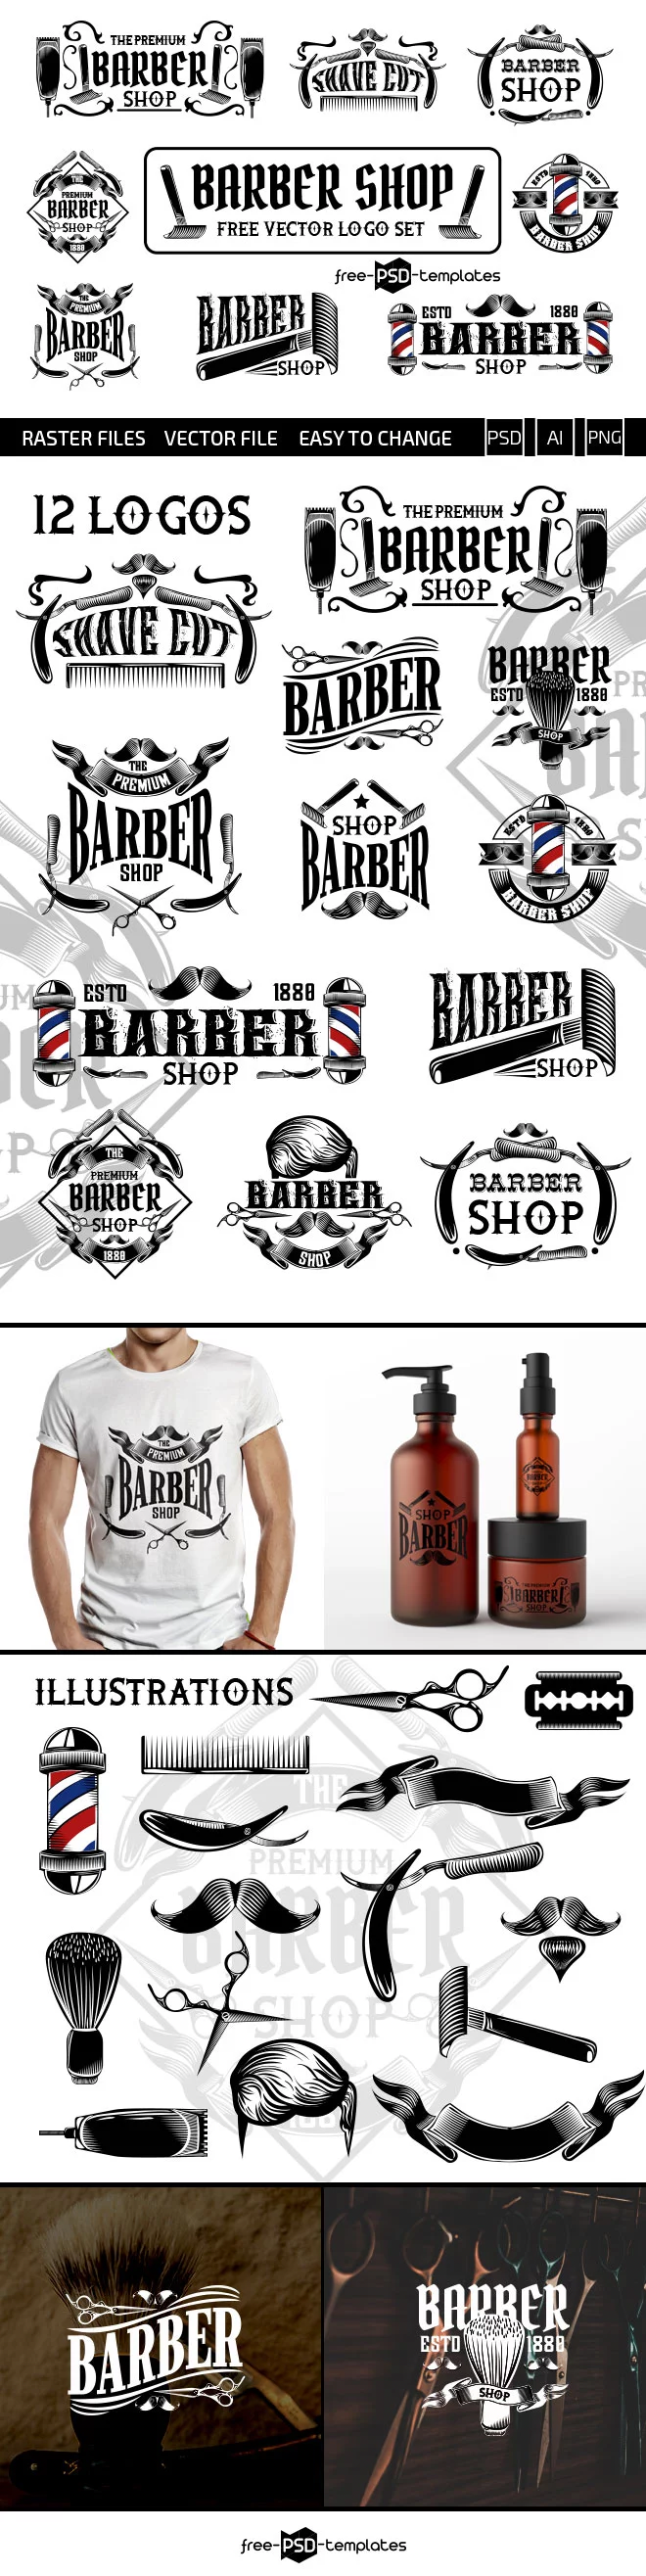 Free Barber Shop Vector Logo Set